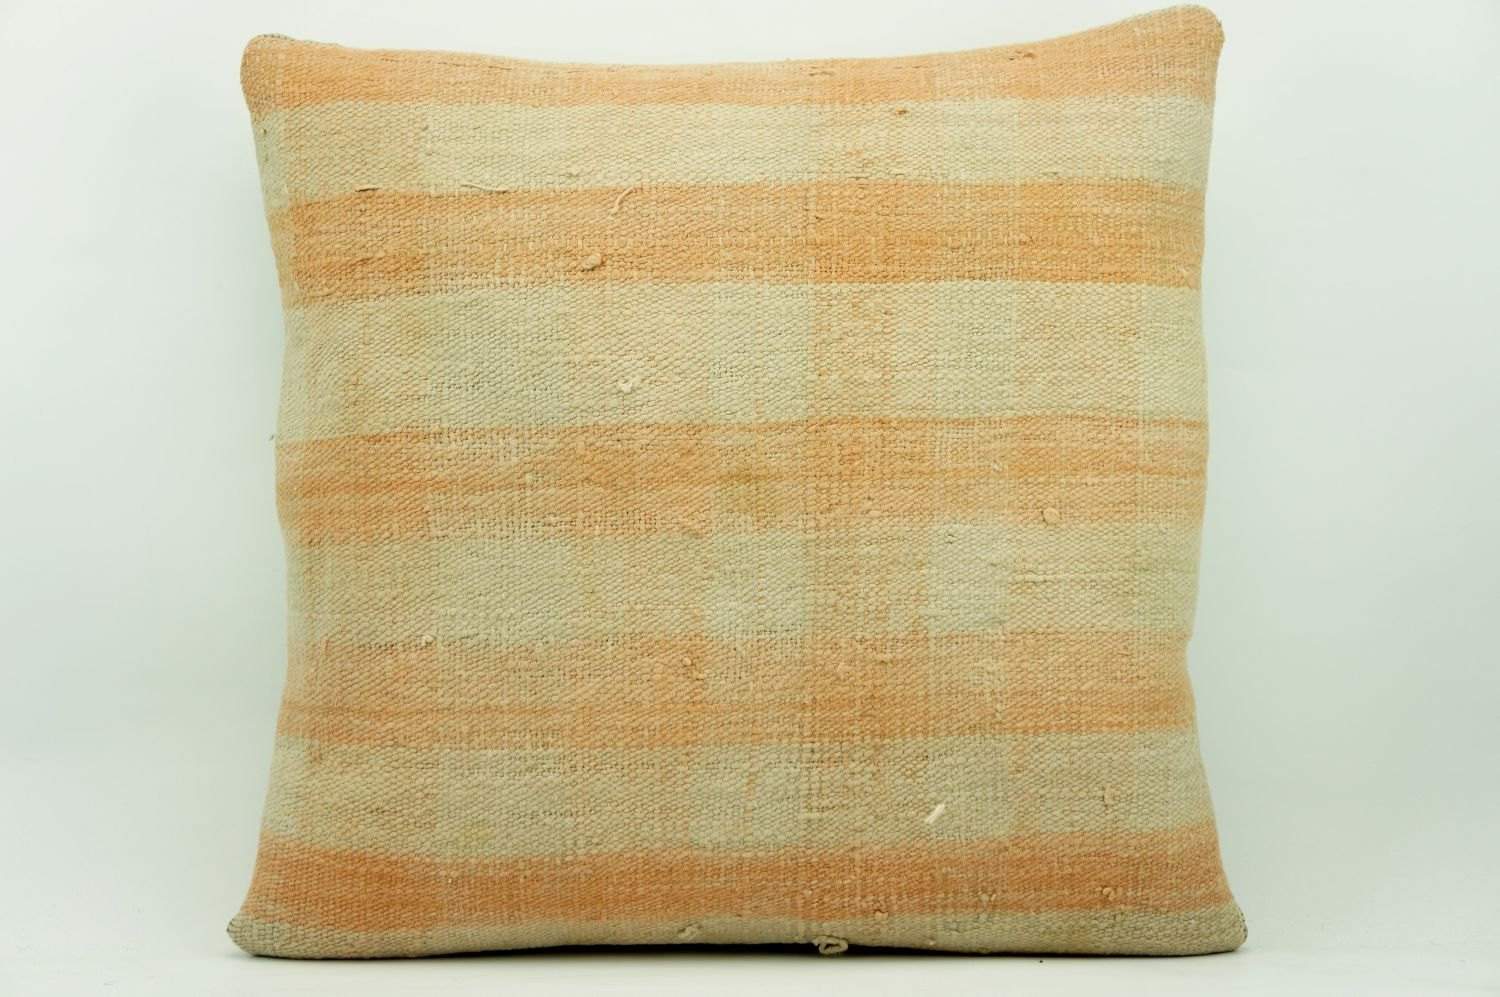 CLEARANCE 16x16 Vintage Hand Woven Kilim Pillow 943 pastel plaid pinkish greenish sham cushion pillow cover - kilimpillowstore
 - 1